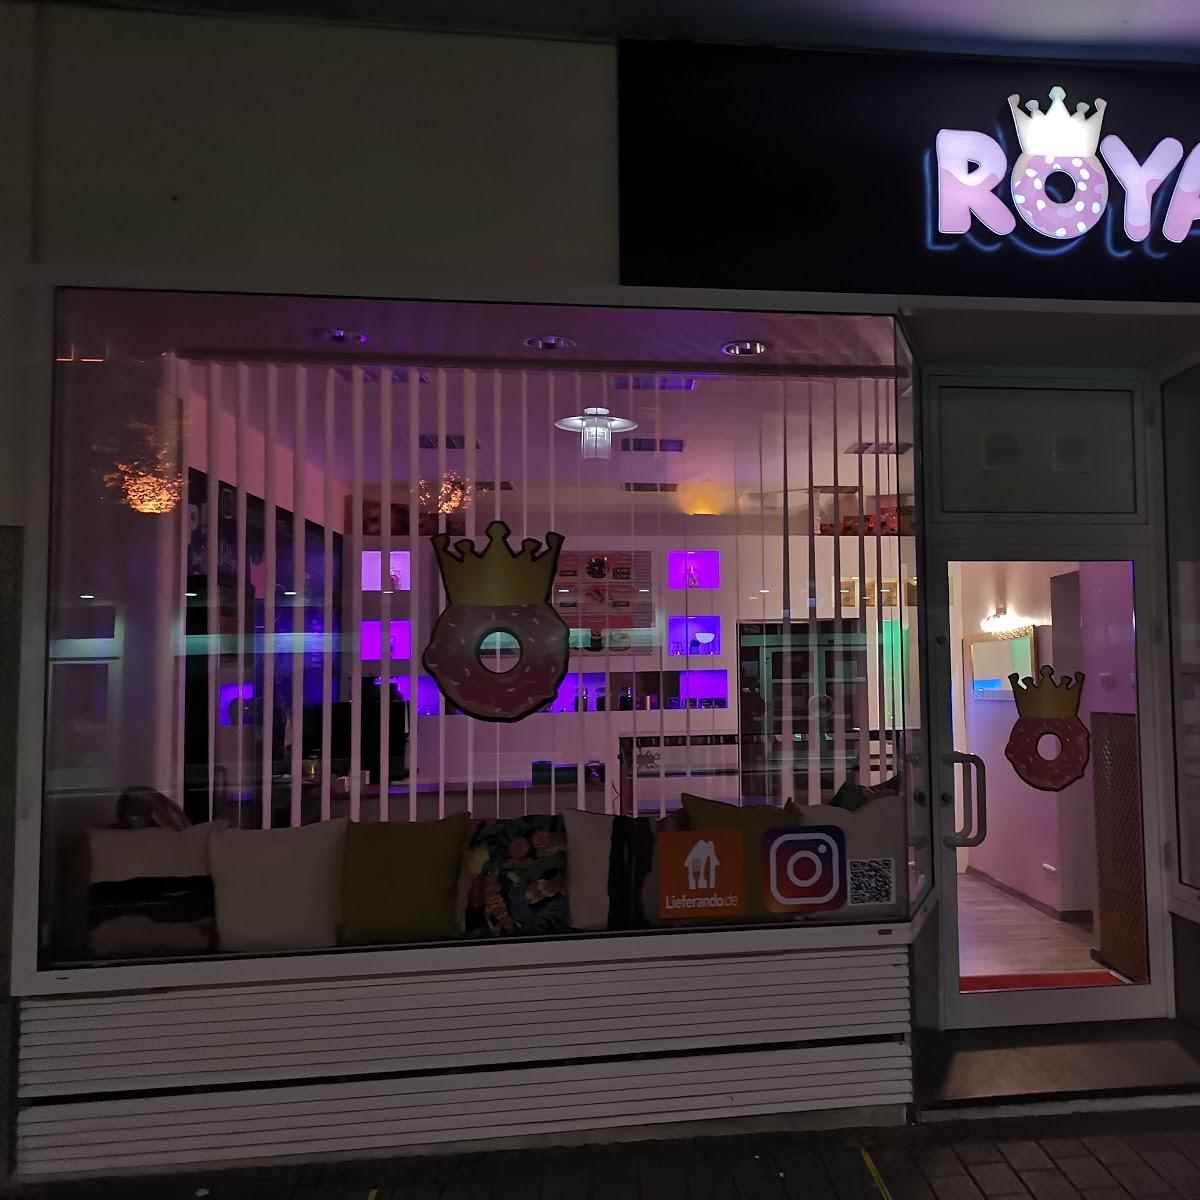 Restaurant "Royal Donuts" in Dortmund